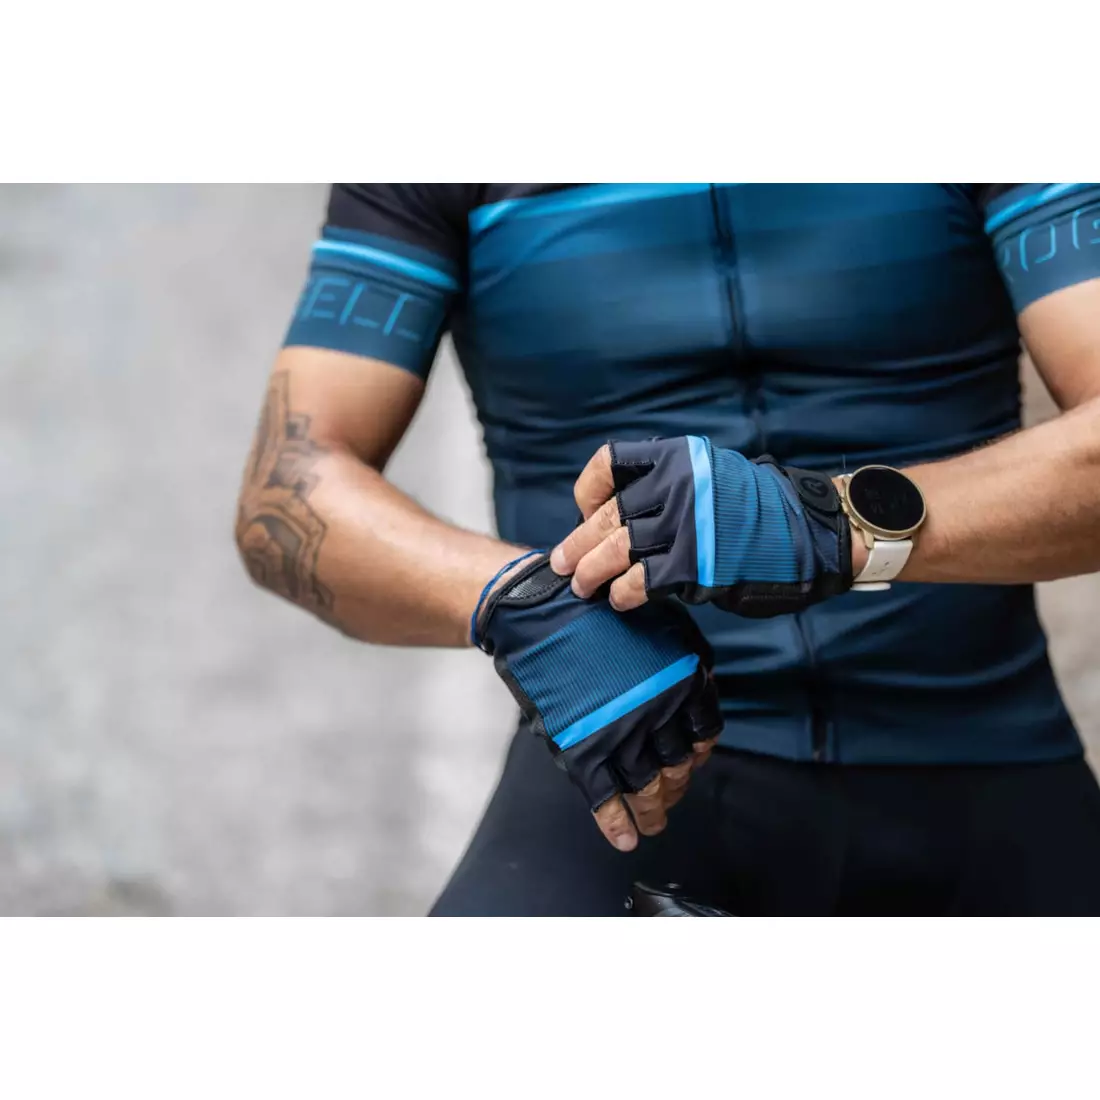 Rogelli HERO II cyklistické rukavice, čierna a modrá